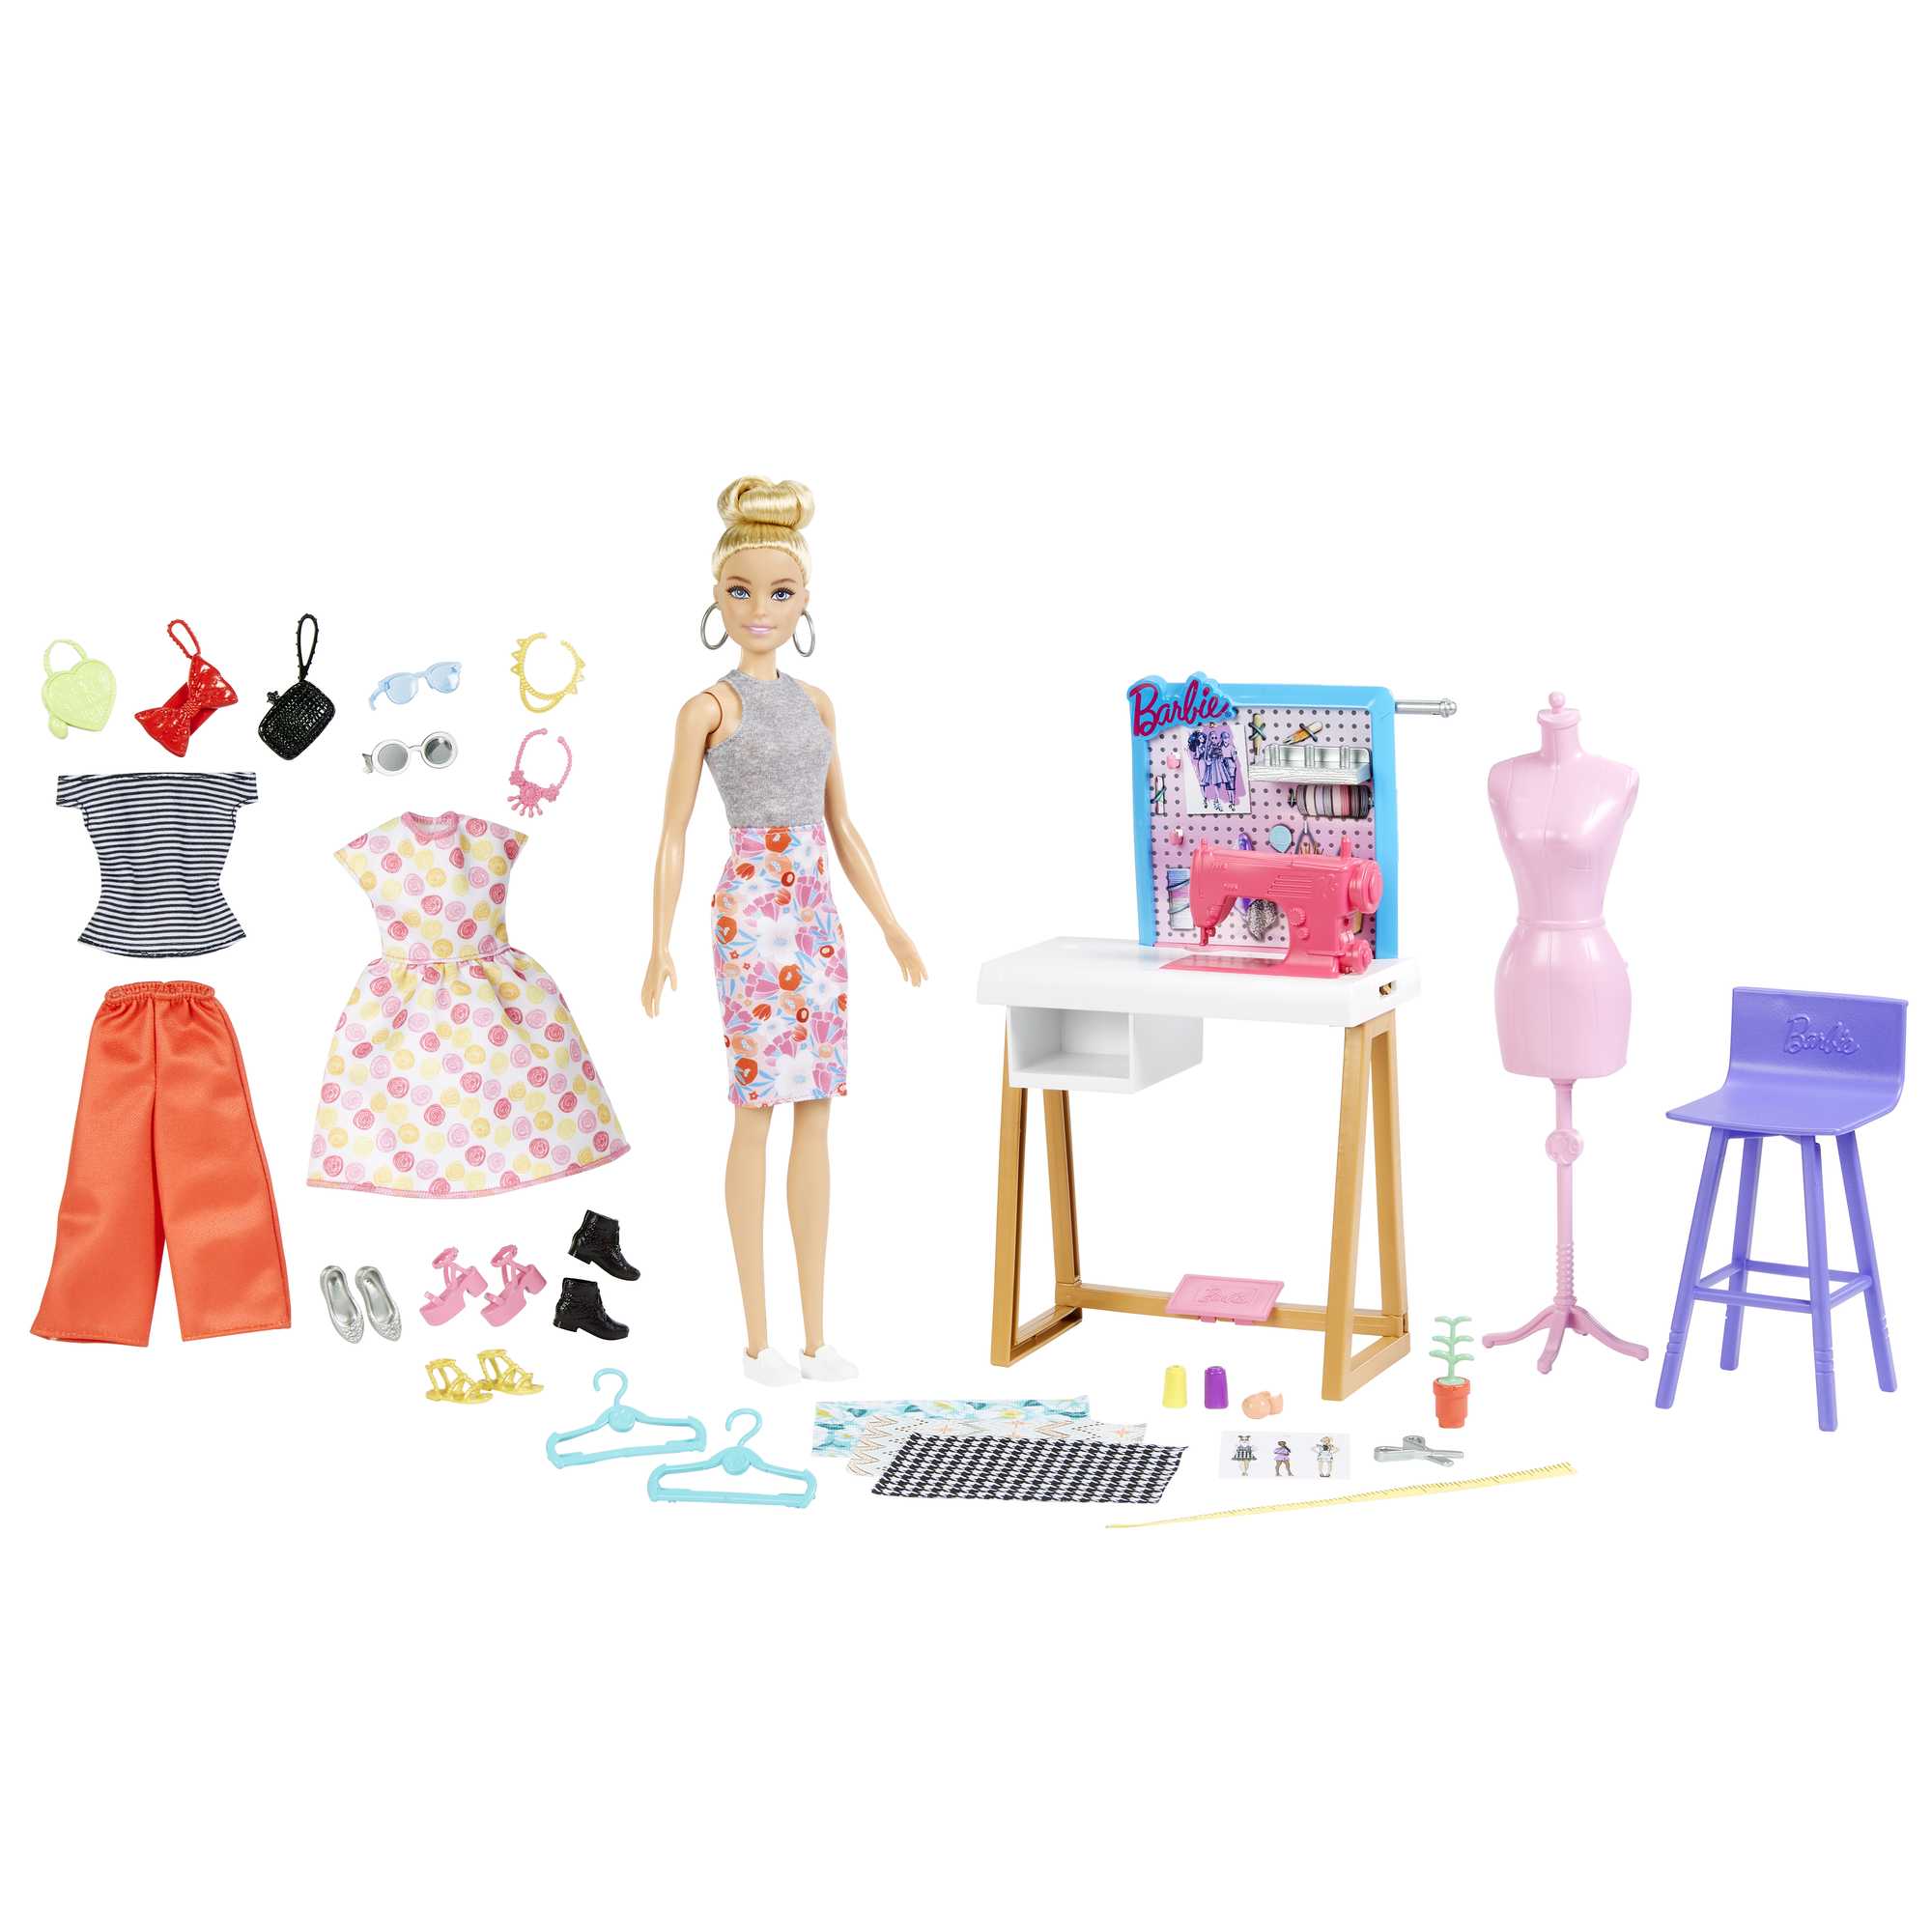 Casa da Polly e Estúdio Fashion da Barbie chegam na Copag!